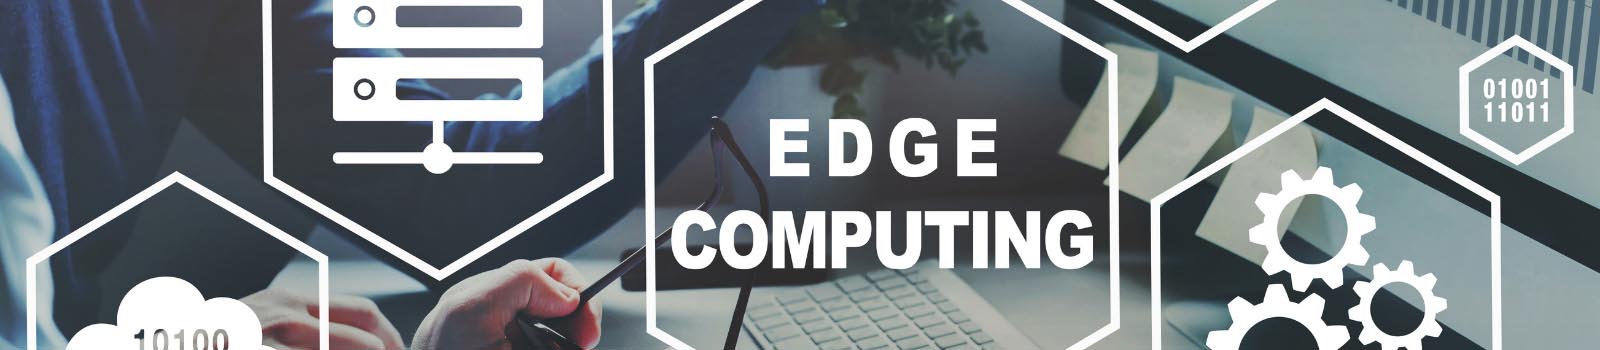 adopting multi access edge computing mec into 5g networks banner